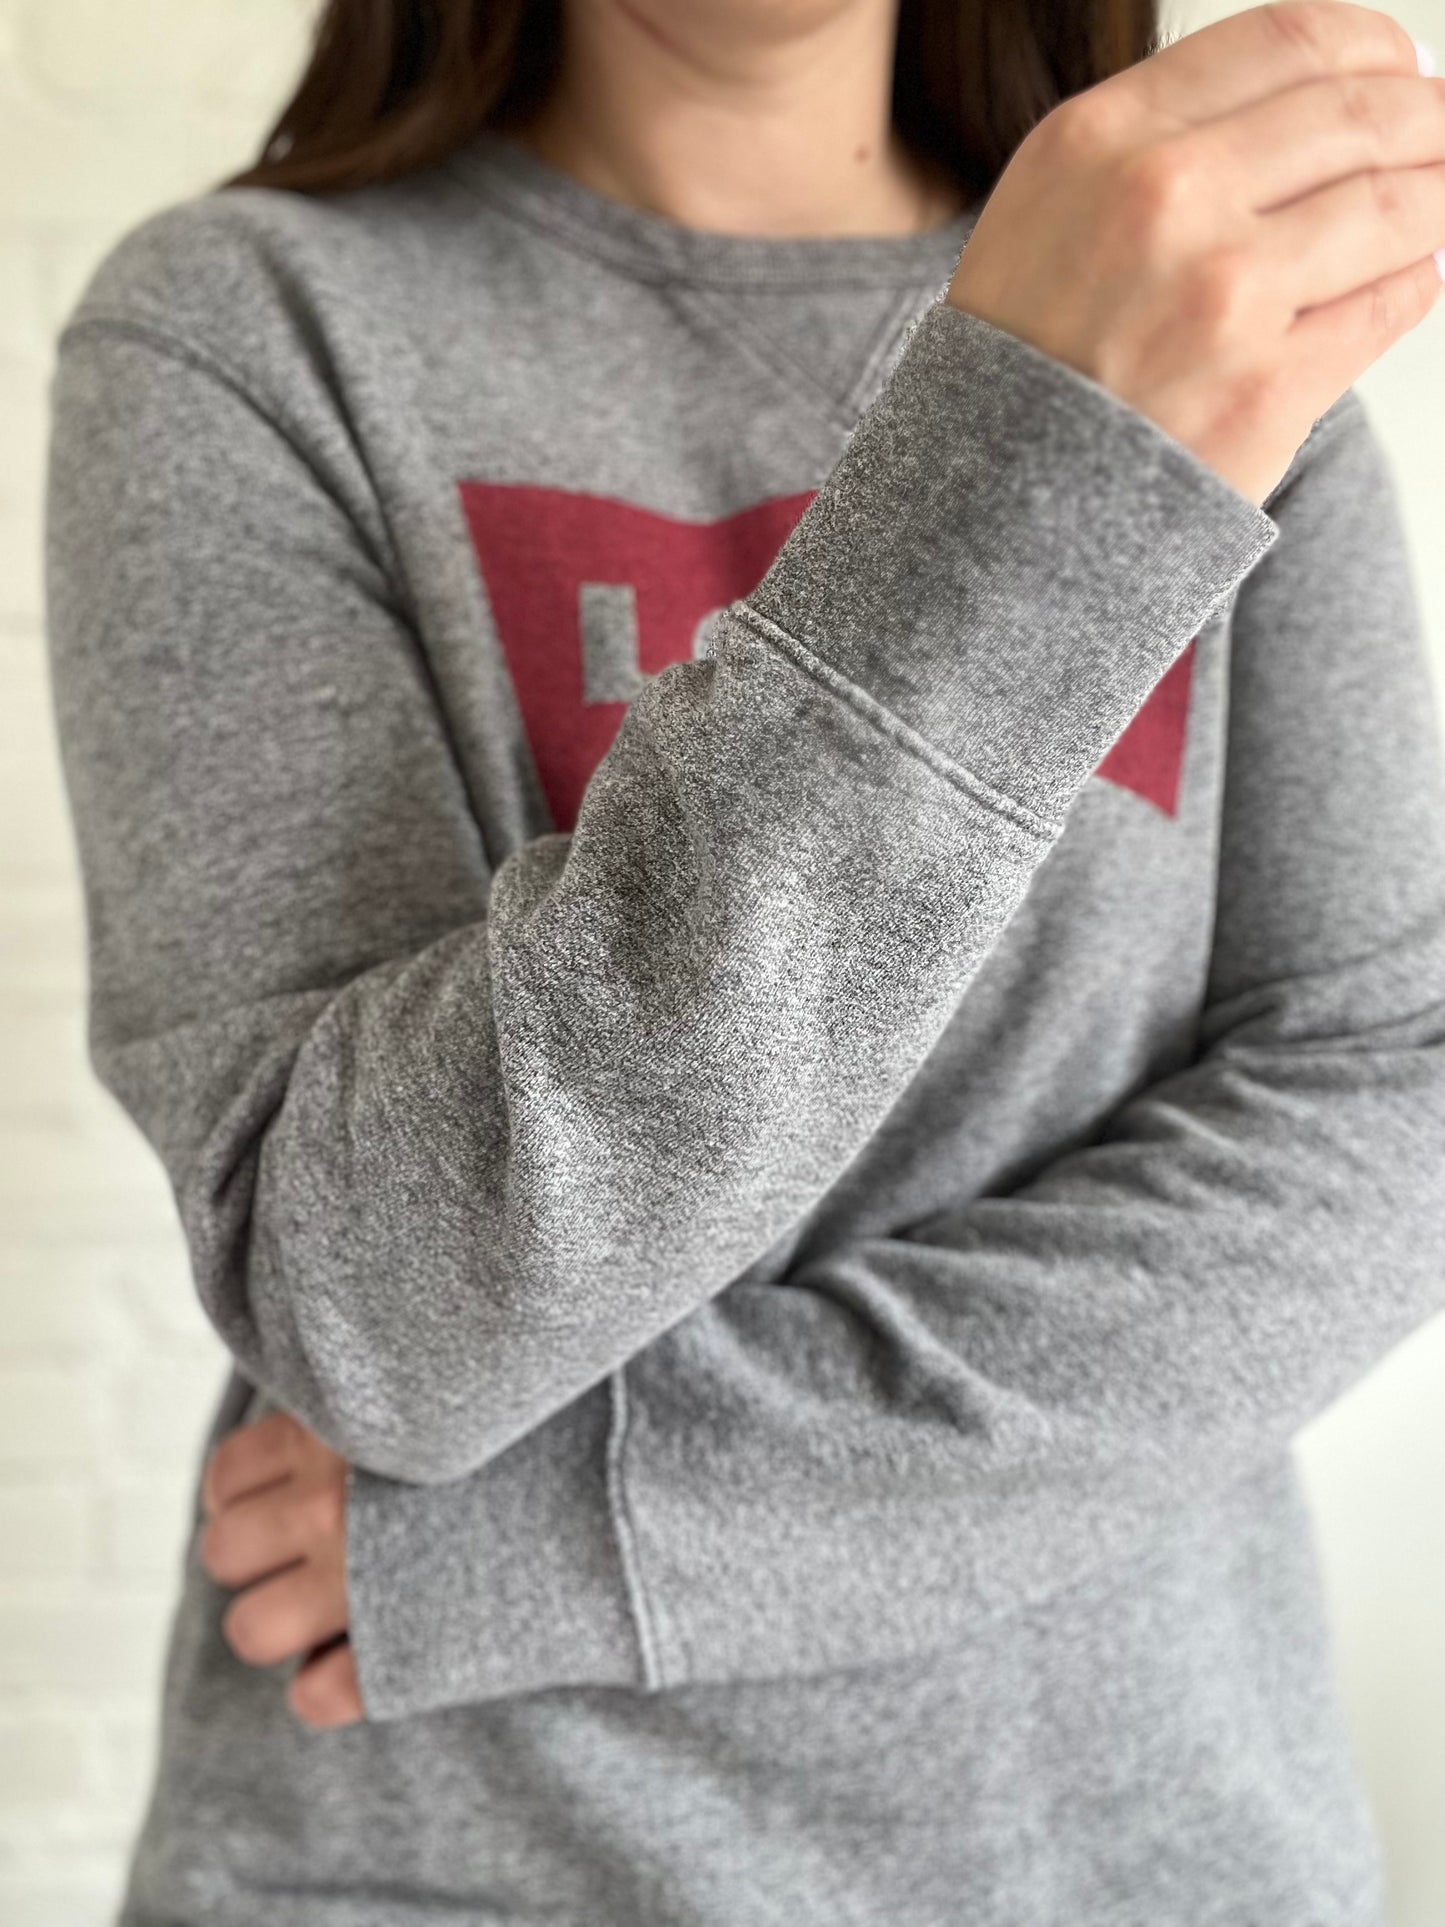 Levi's Graphic Standard Sweater - XXL